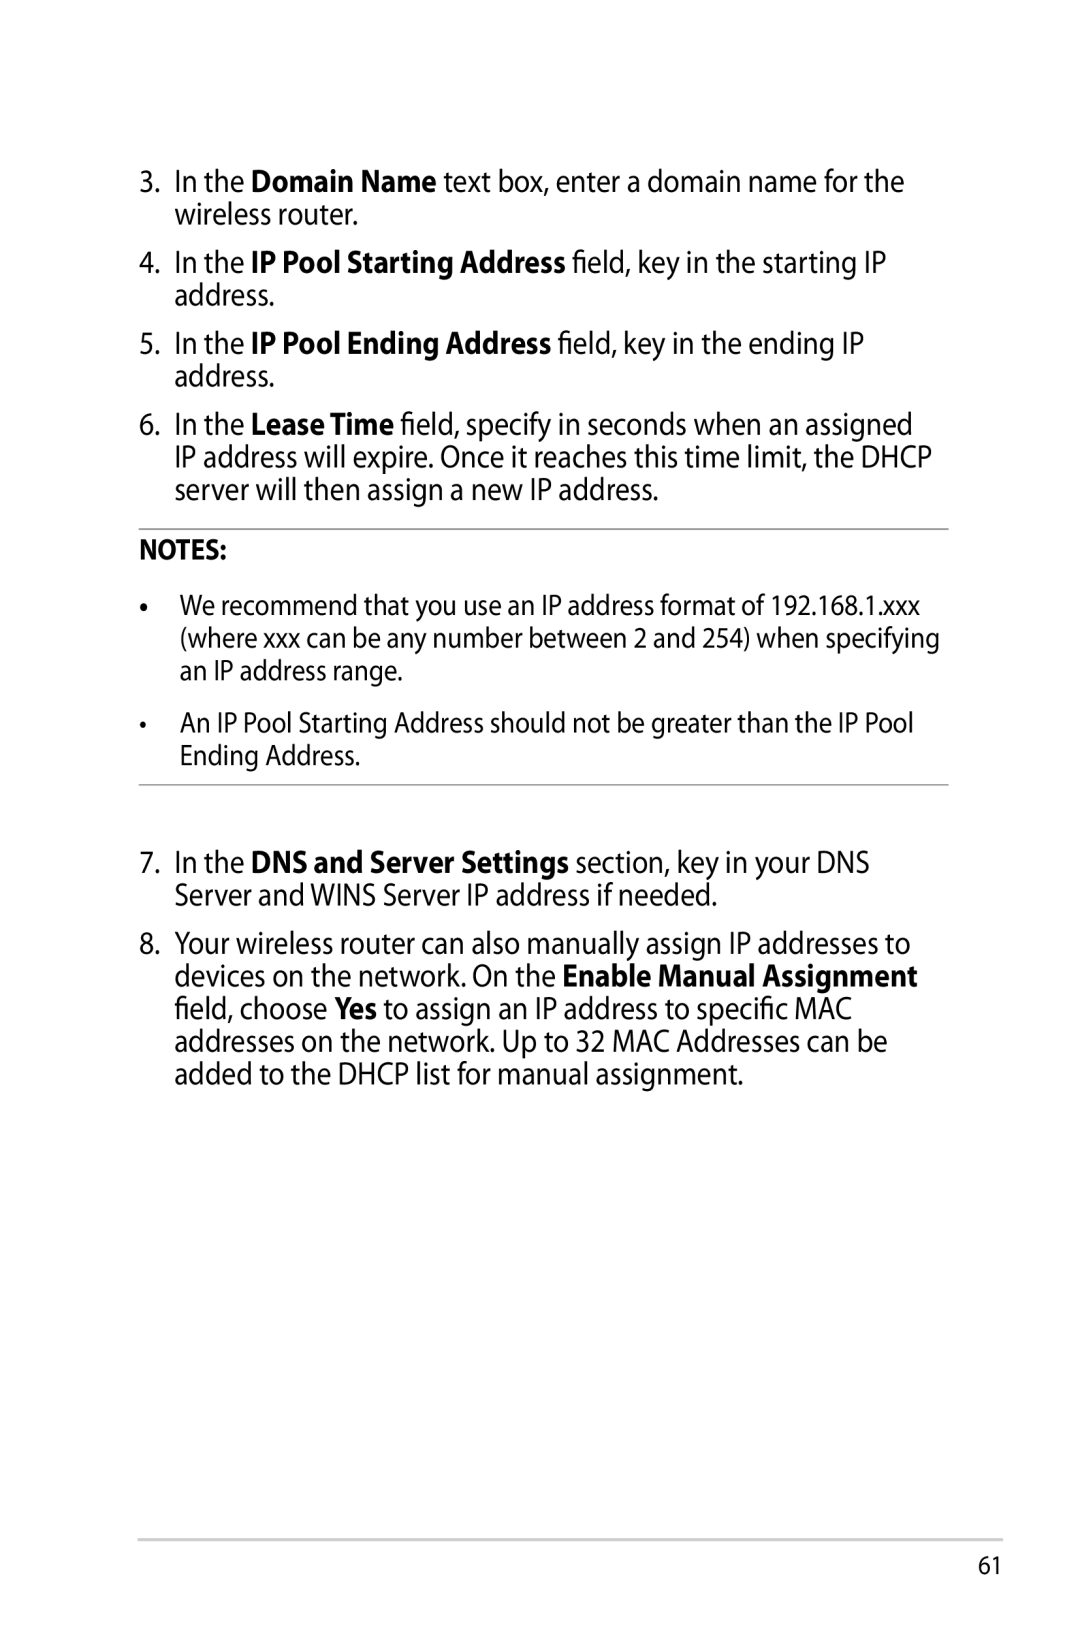 Asus RTAC68U manual In the IP Pool Ending Address field, key in the ending IP address 